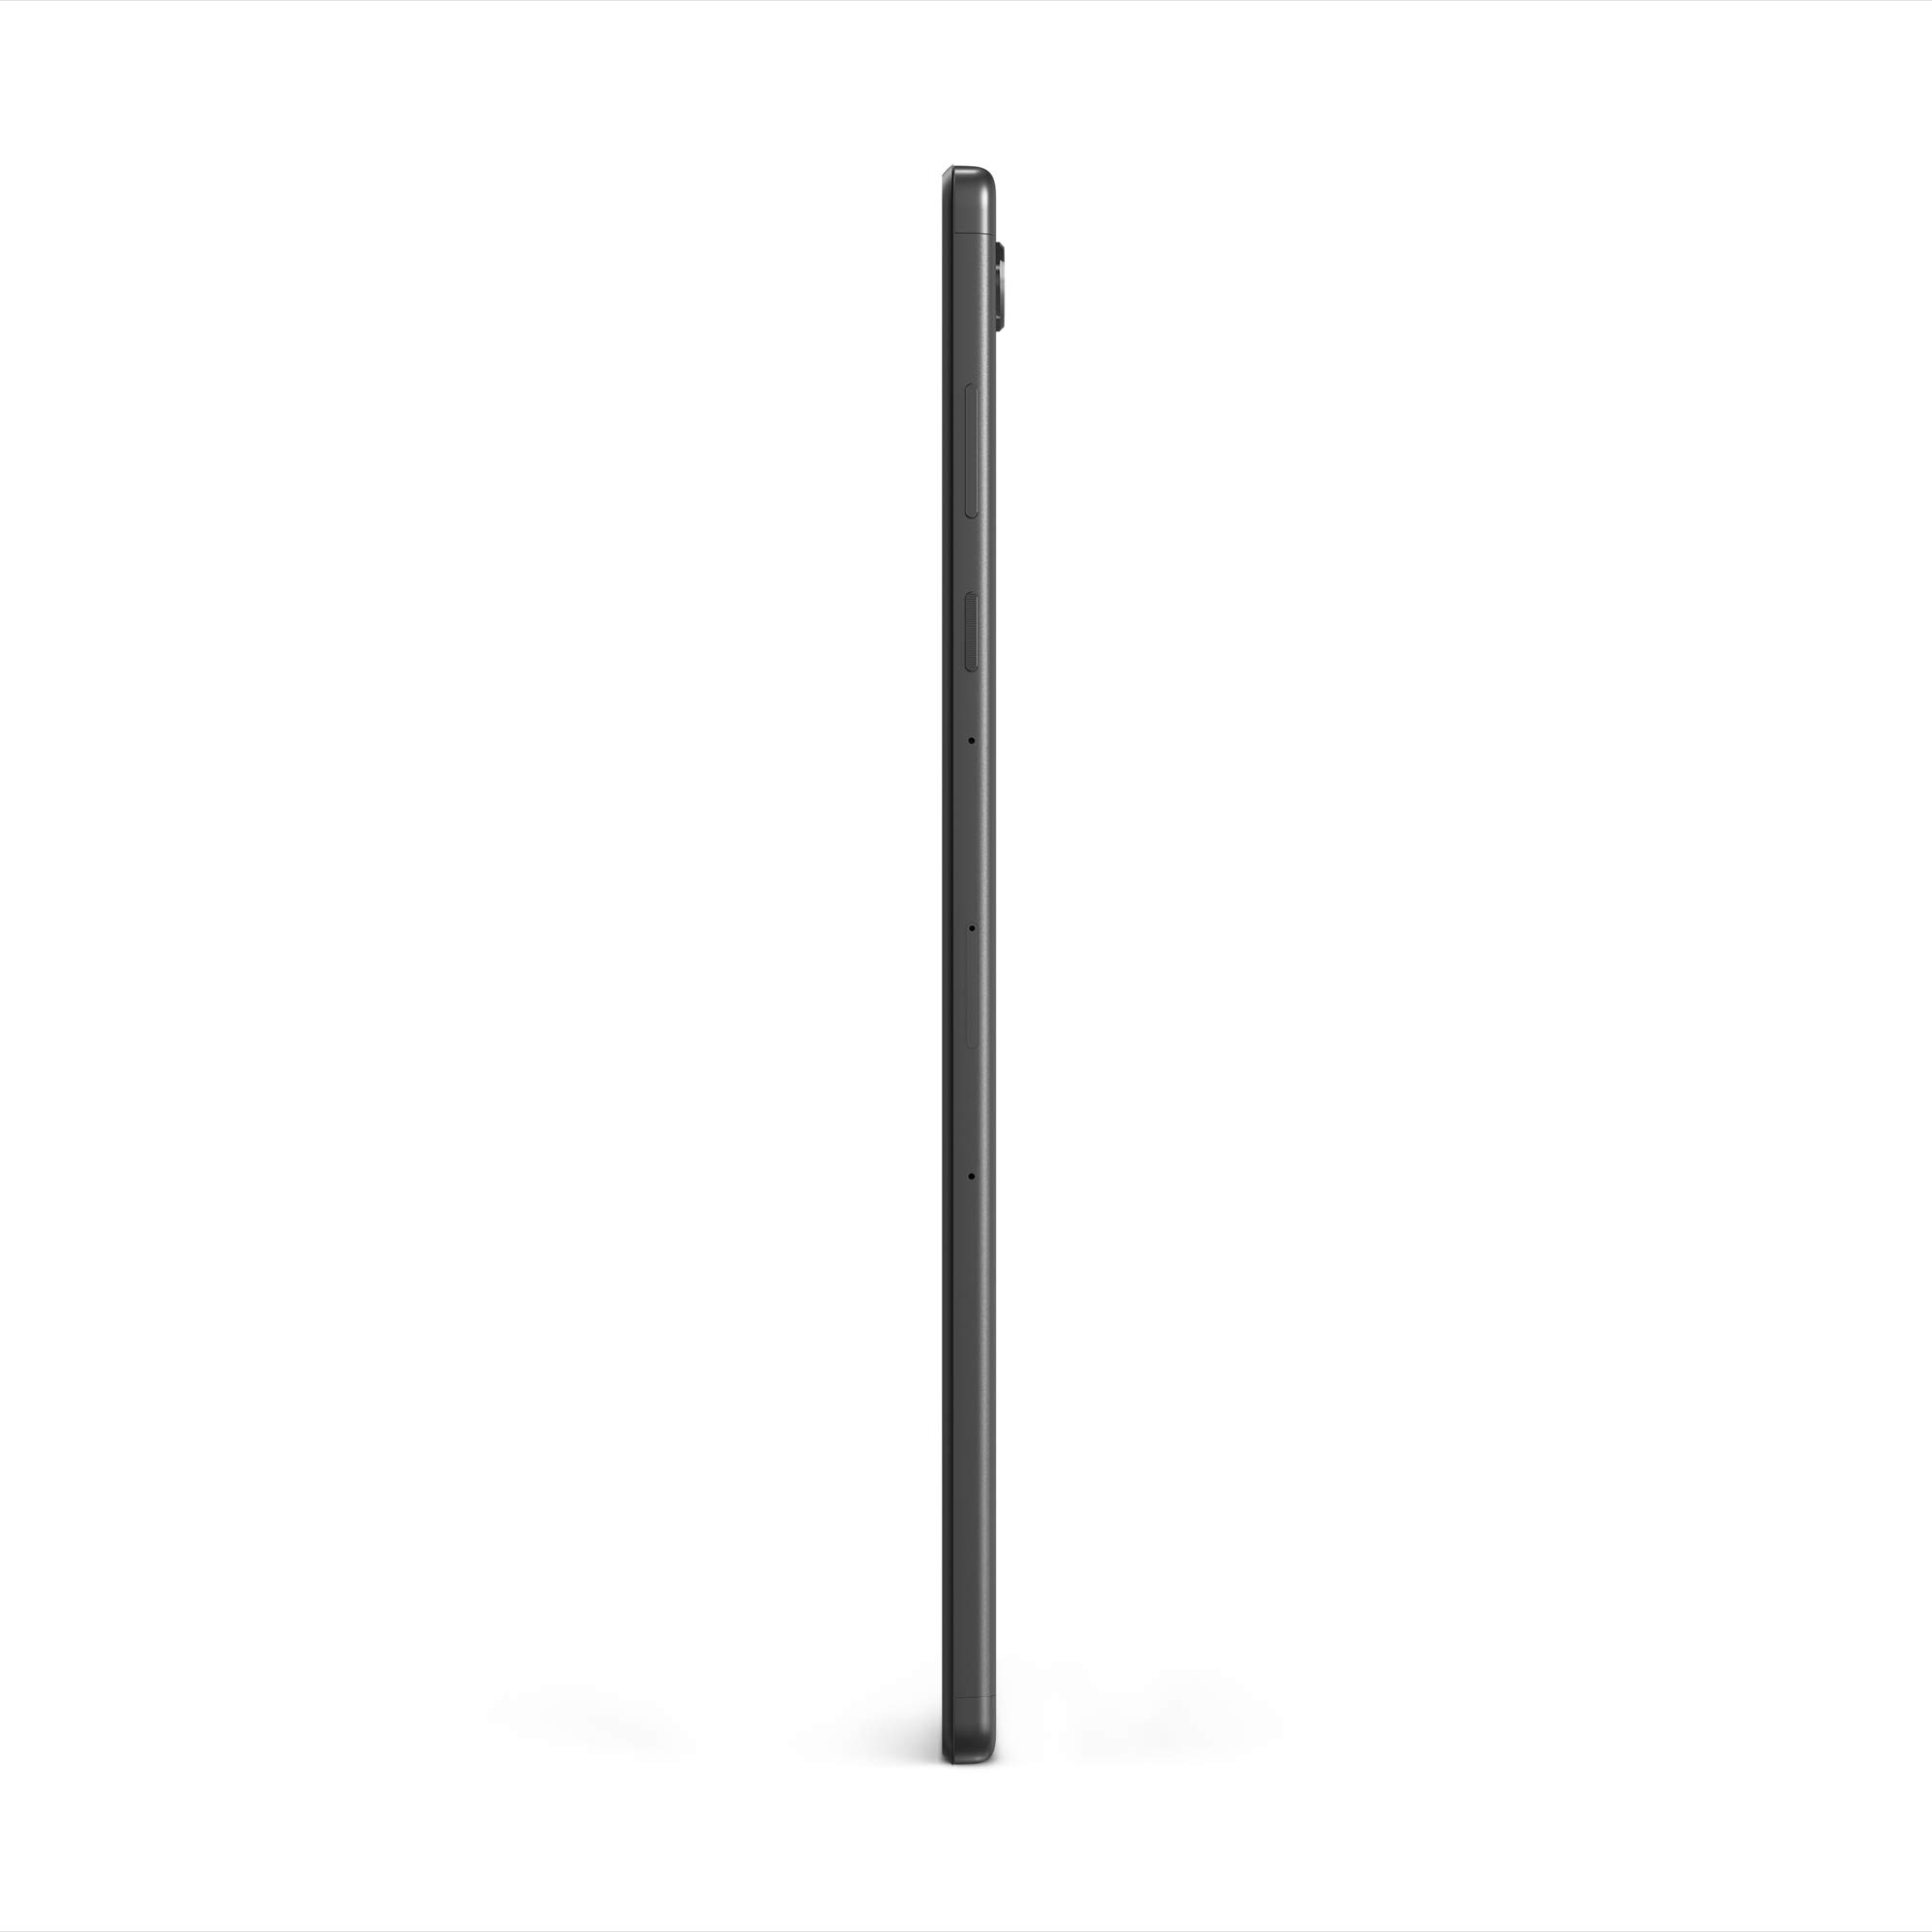 Lenovo Tab M10 Plus, FHD Android Tablet, Octa-Core Processor, 32GB Storage, 2GB RAM, Iron Grey